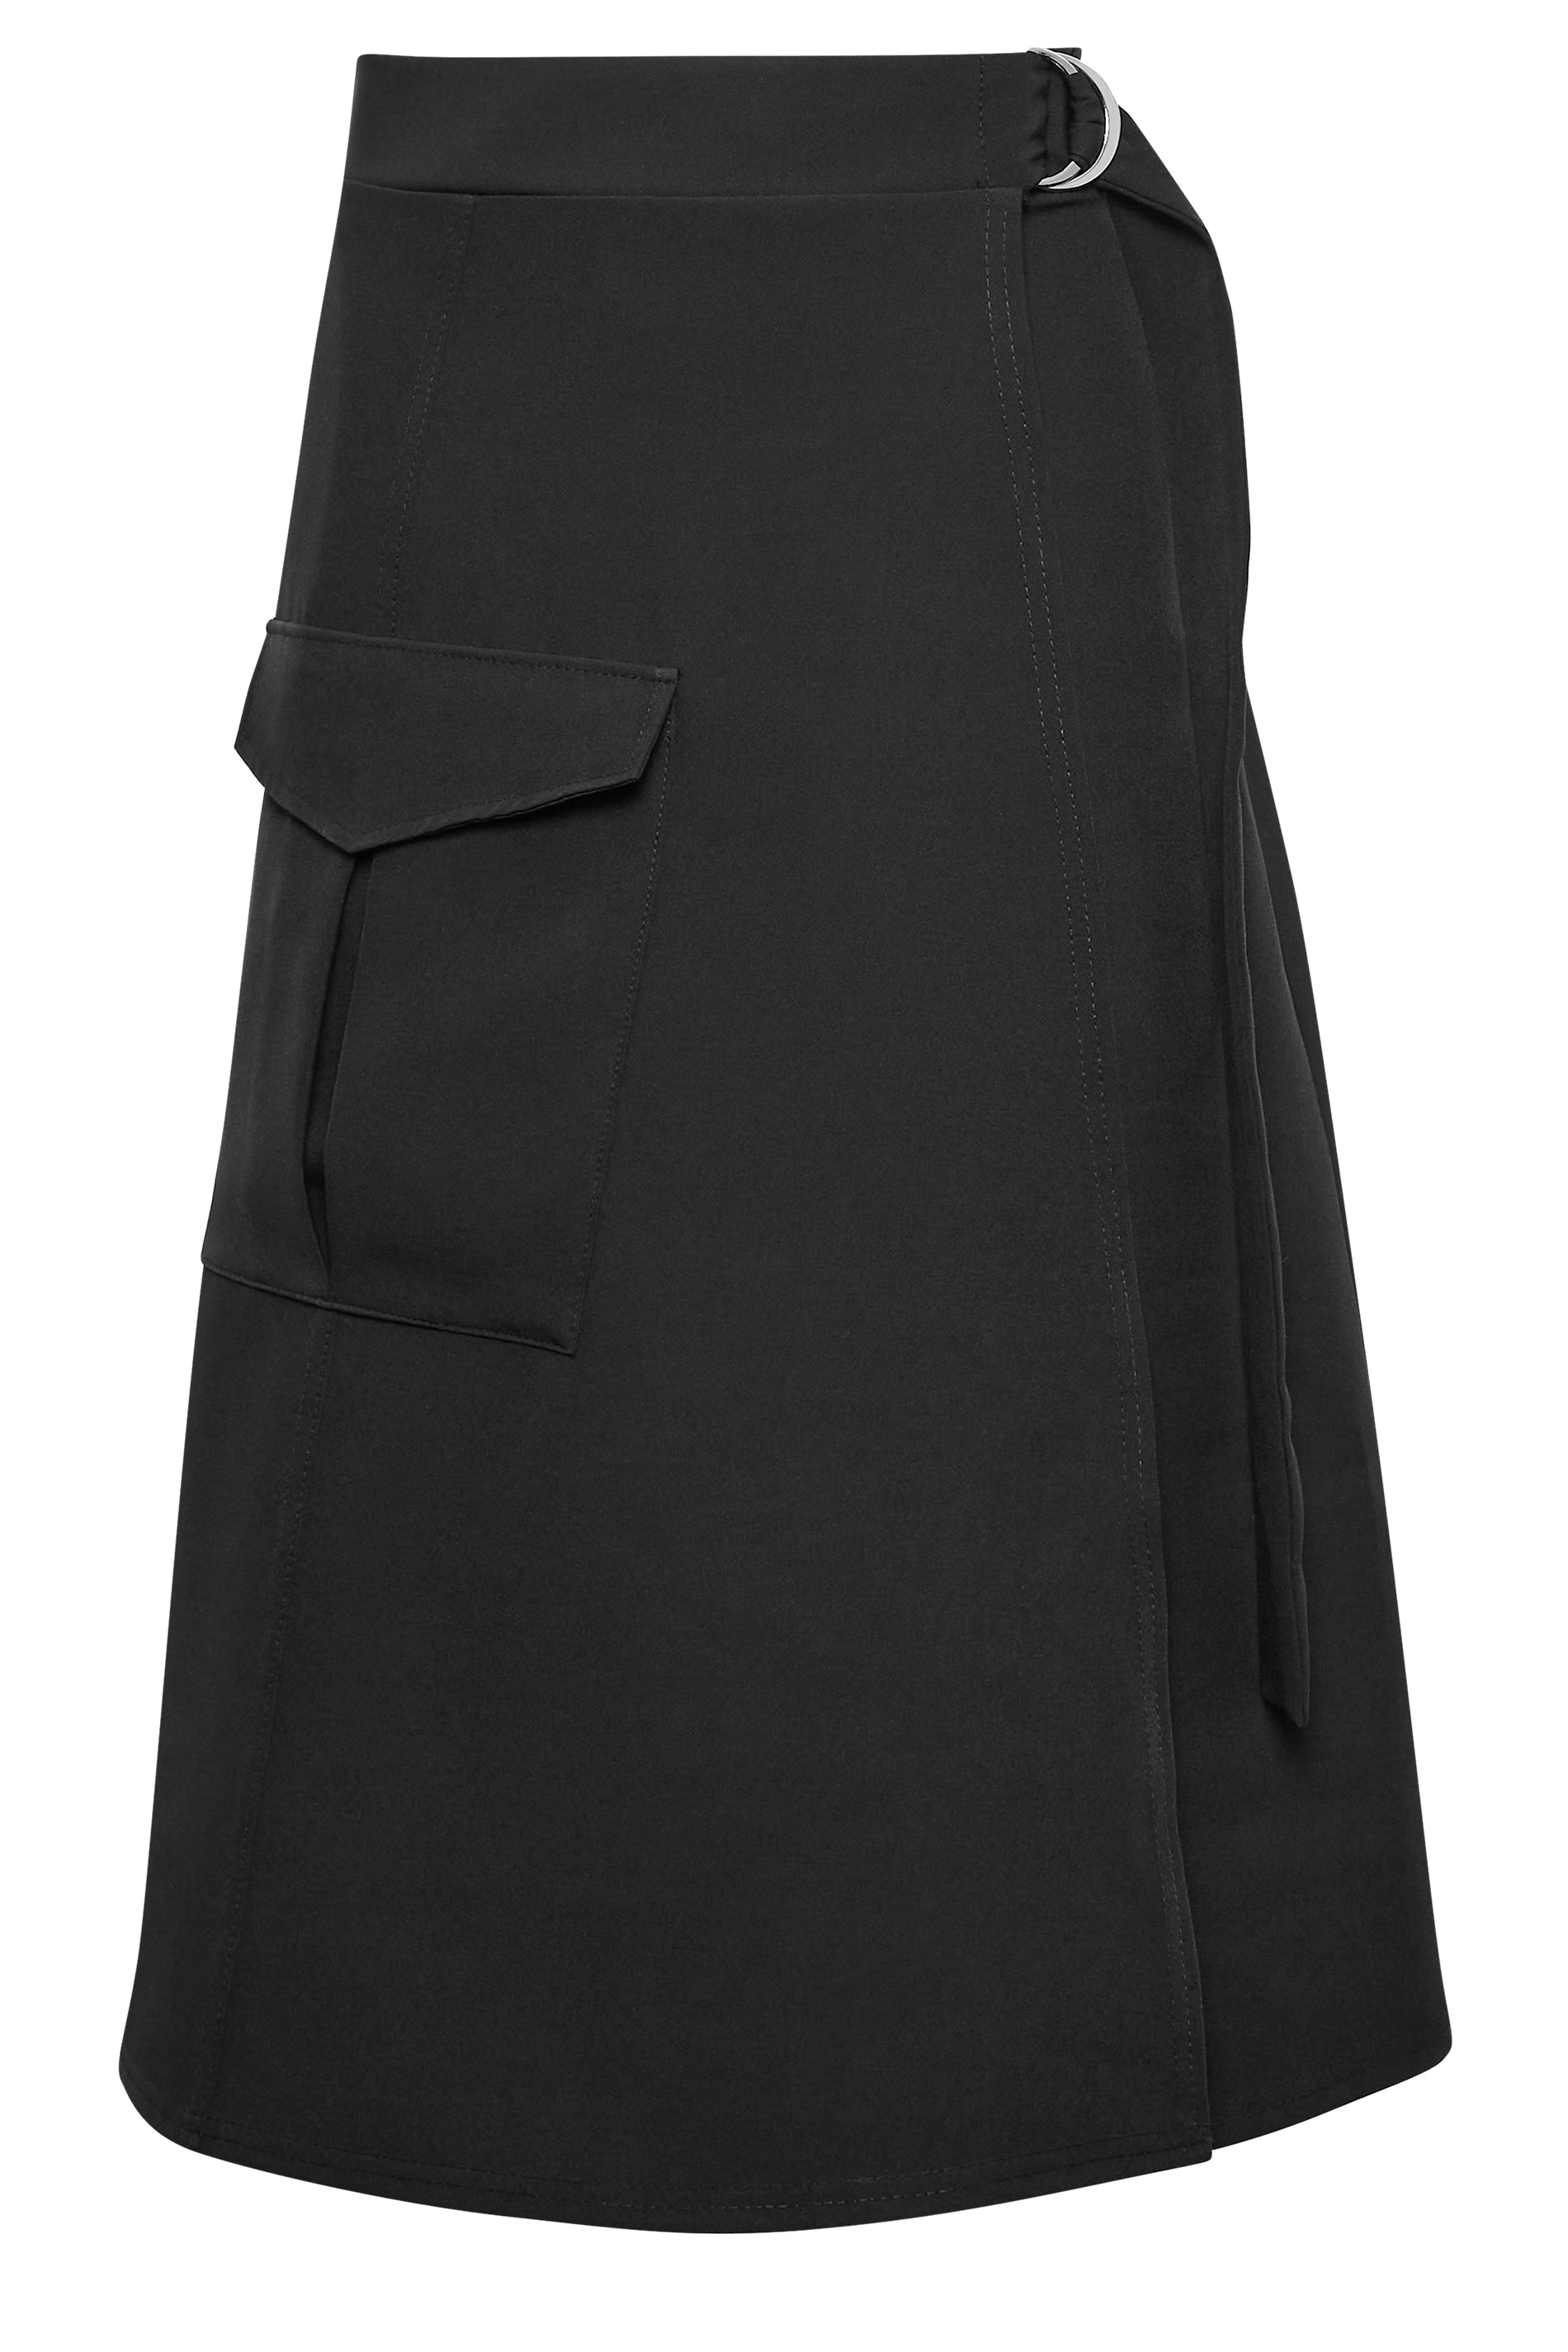 YOURS PETITE Plus Size Black Wrap Cargo Midi Skirt | Yours Clothing 1